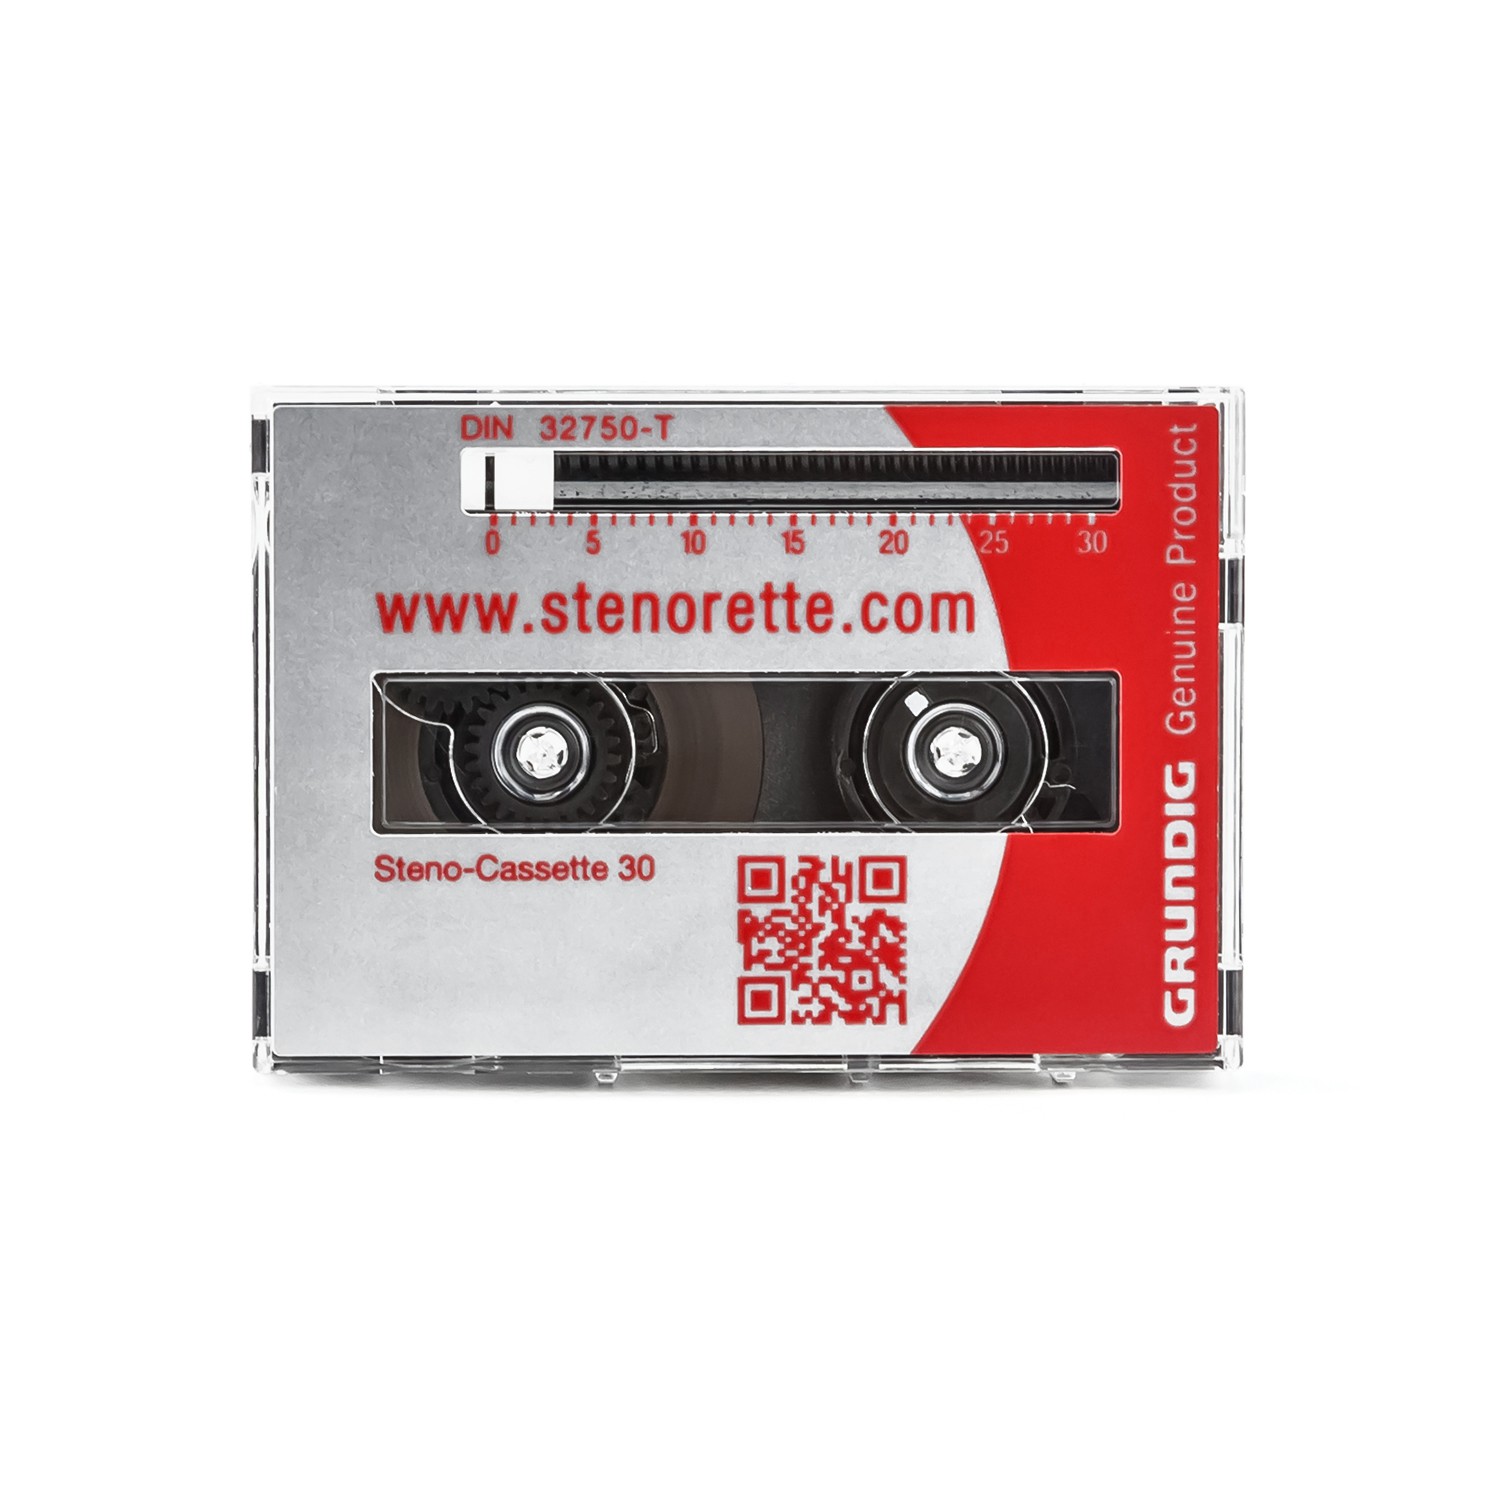 Grundig Steno Cassette, Steno Cassette 30, GGO 5610, stenorette, DIN 32750-T, 32750 